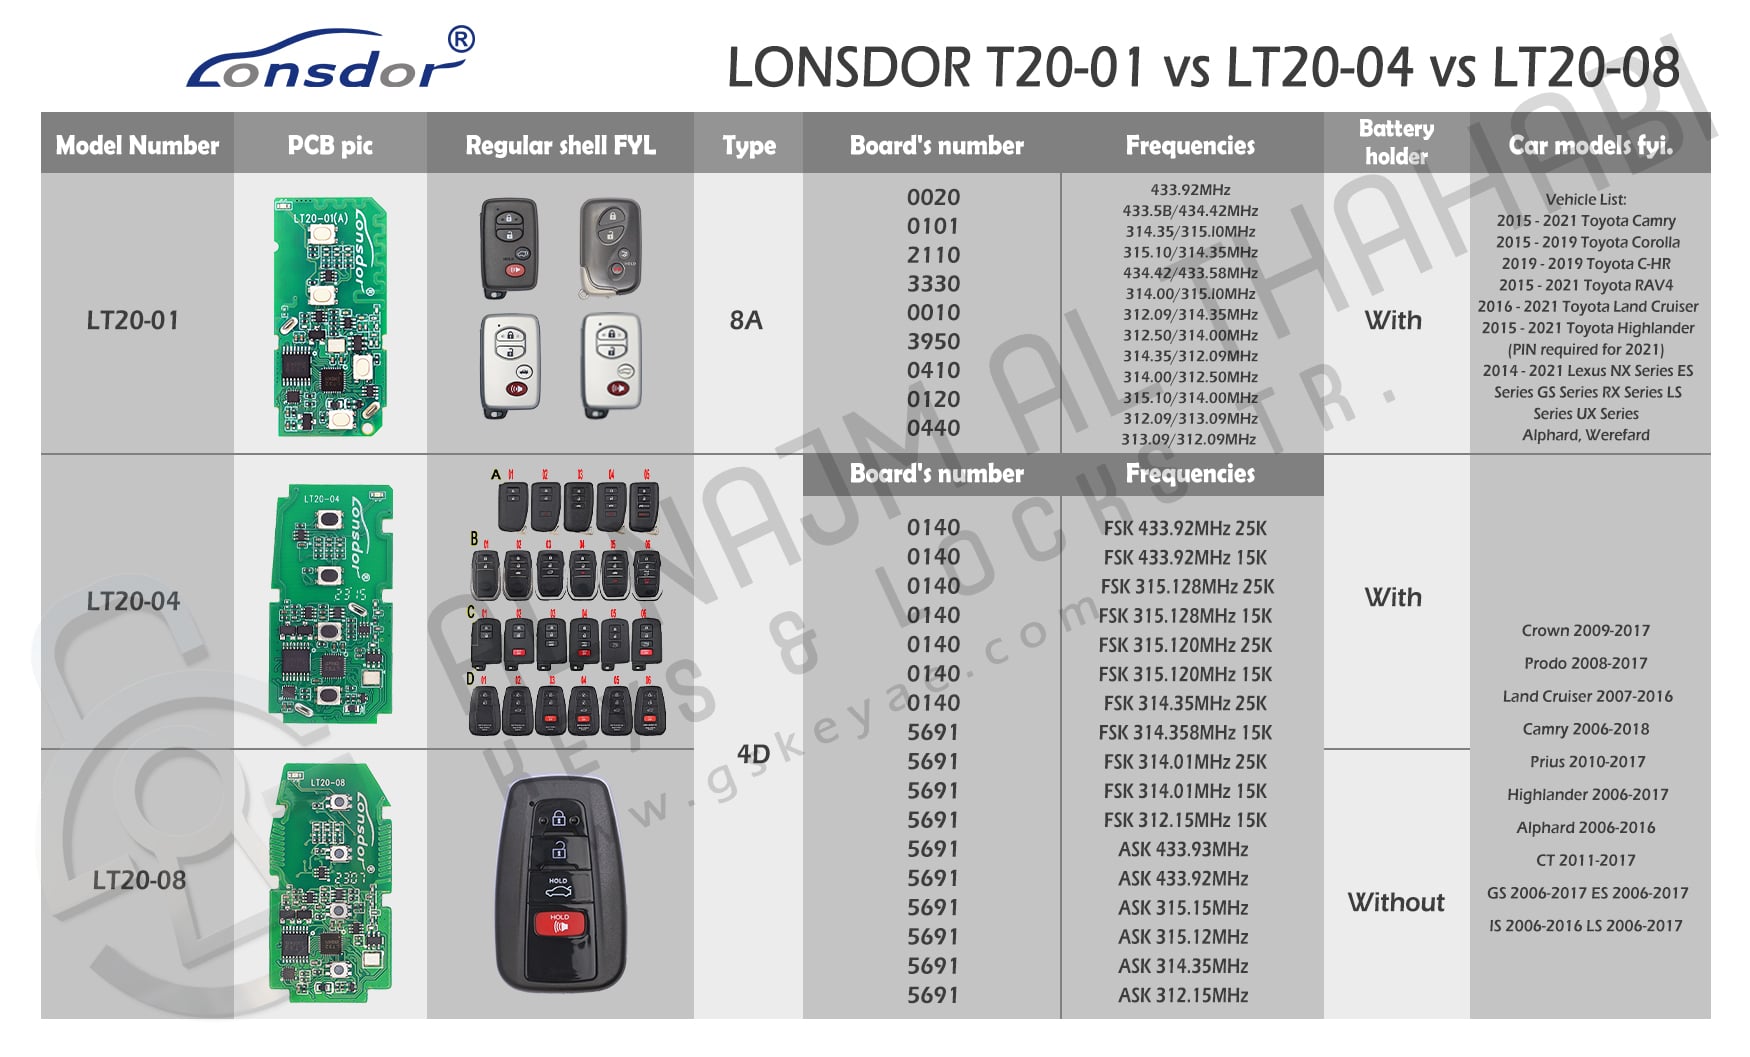 Lonsdor T20-01 vs LT20-04 vs LT20-08